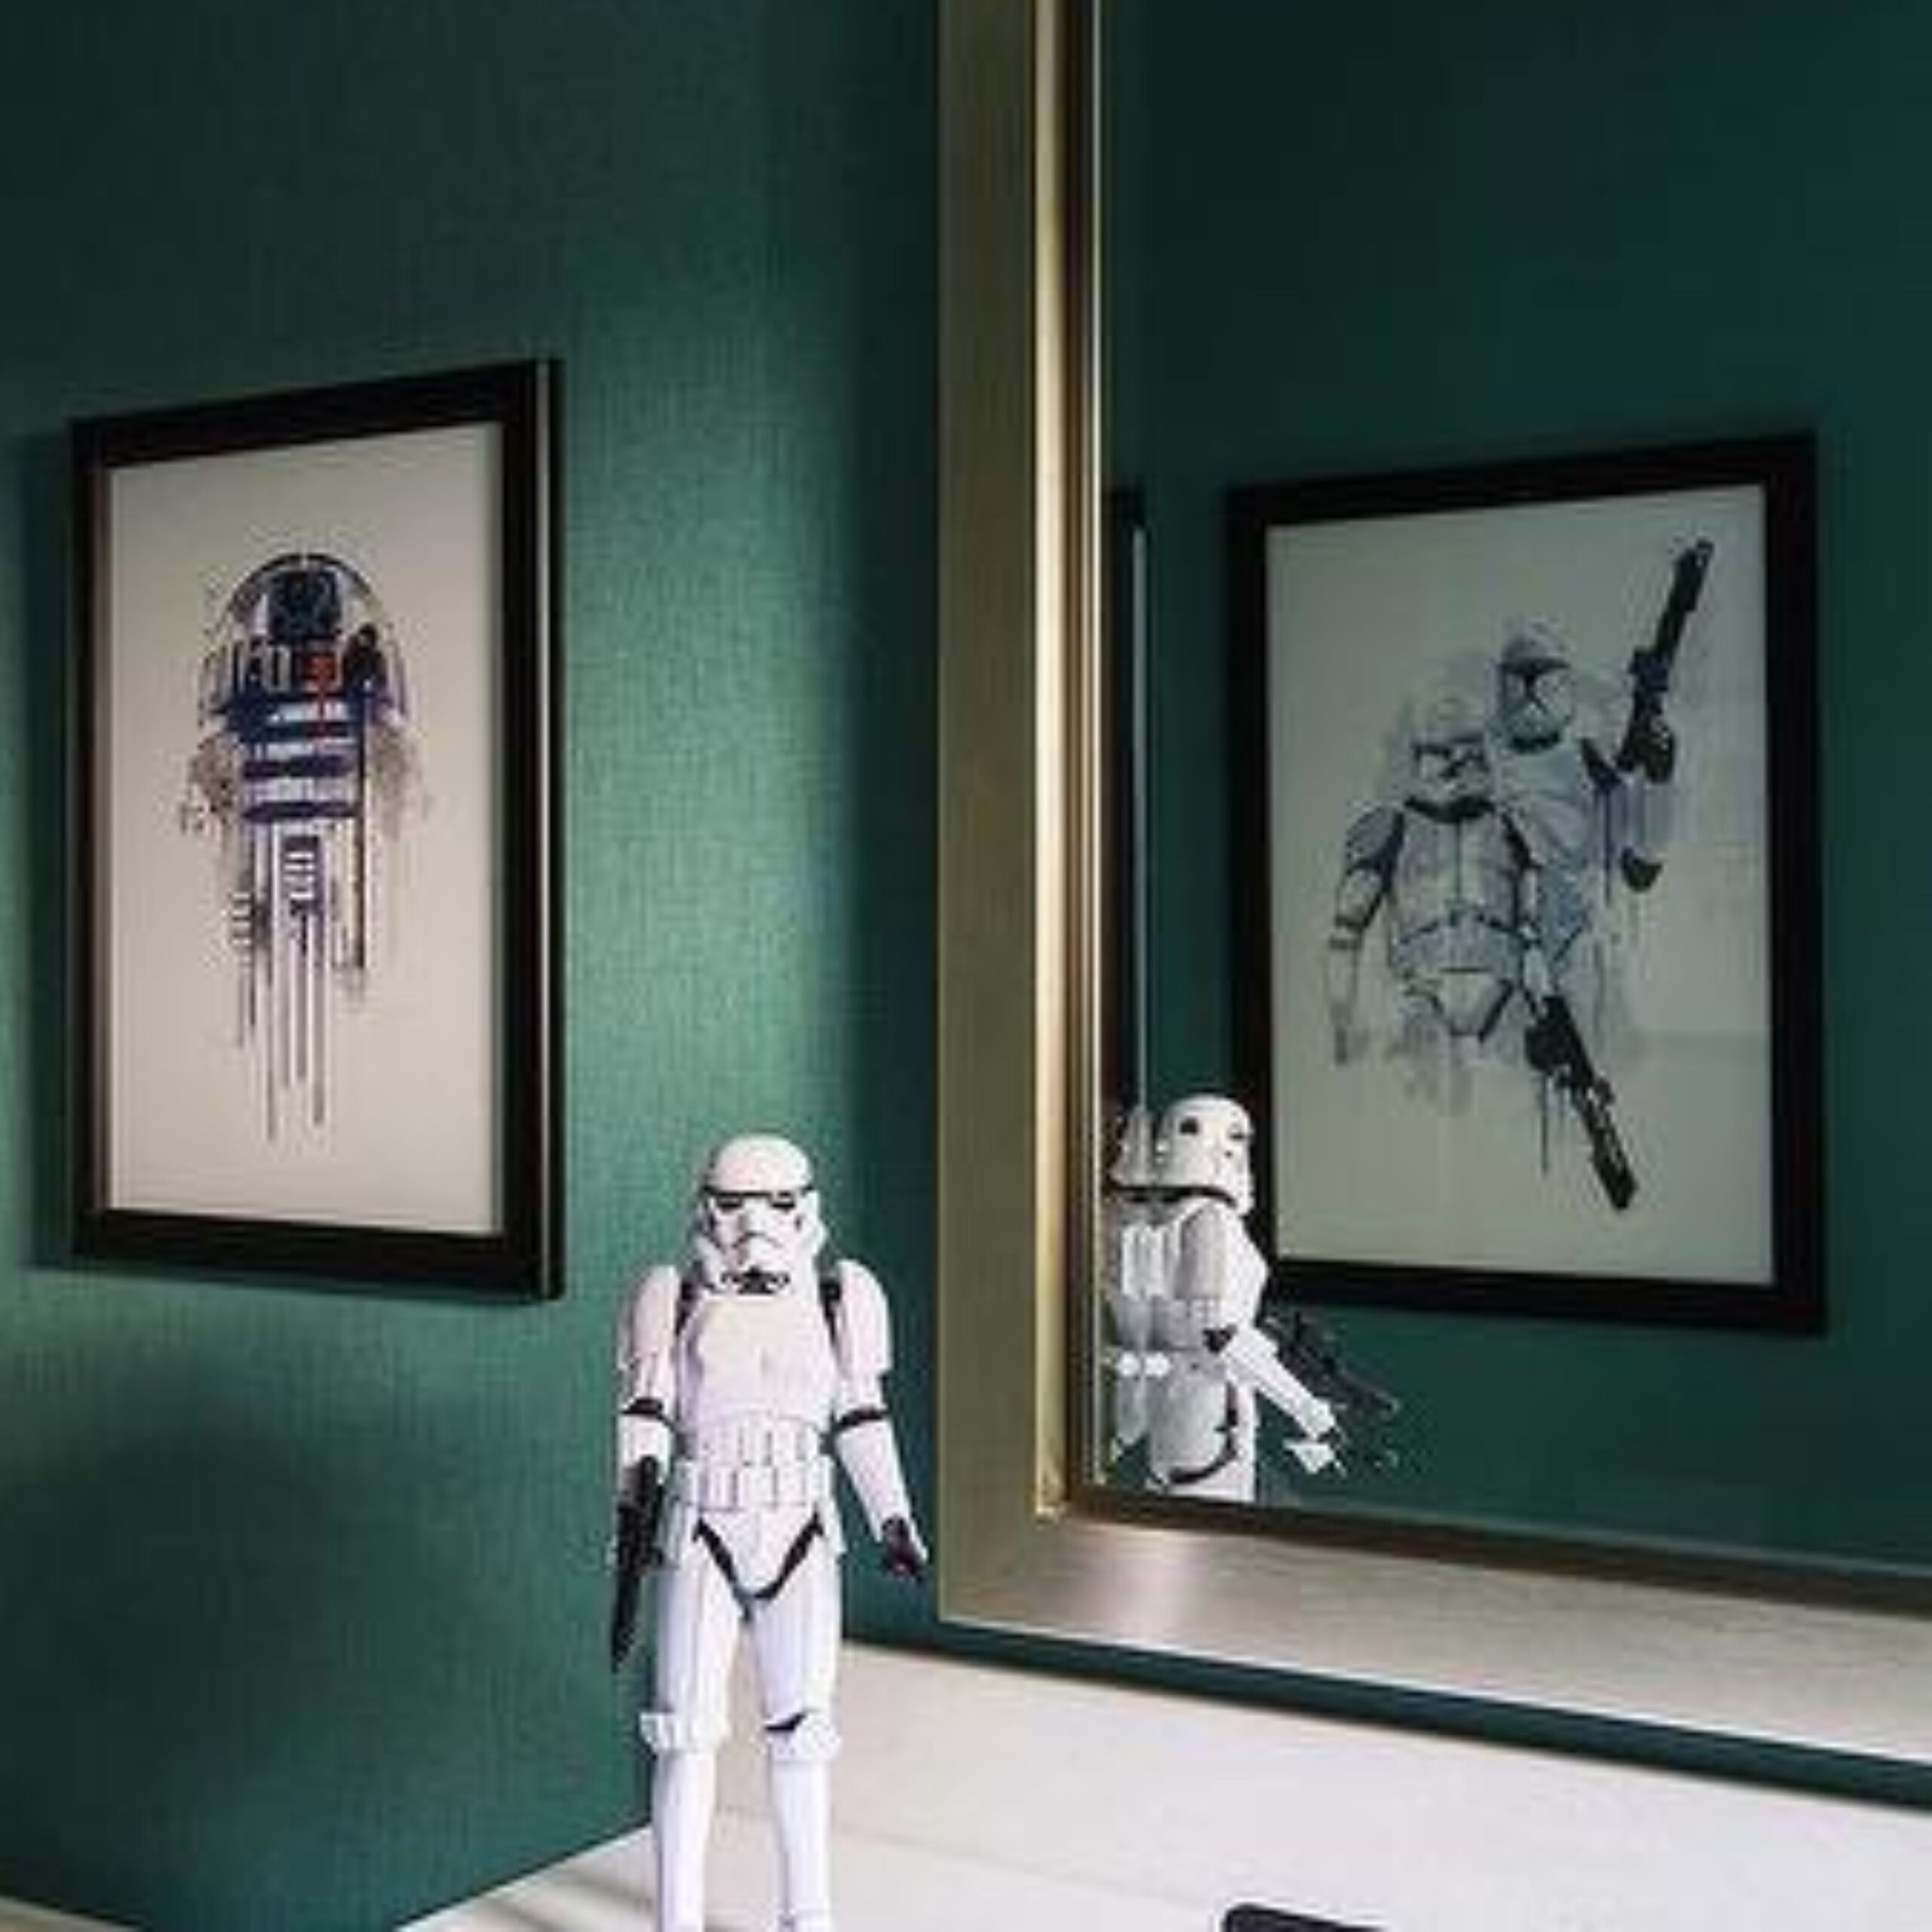 Top 18+ Awesome Star Wars Bathroom Ideas - Peto Rugs